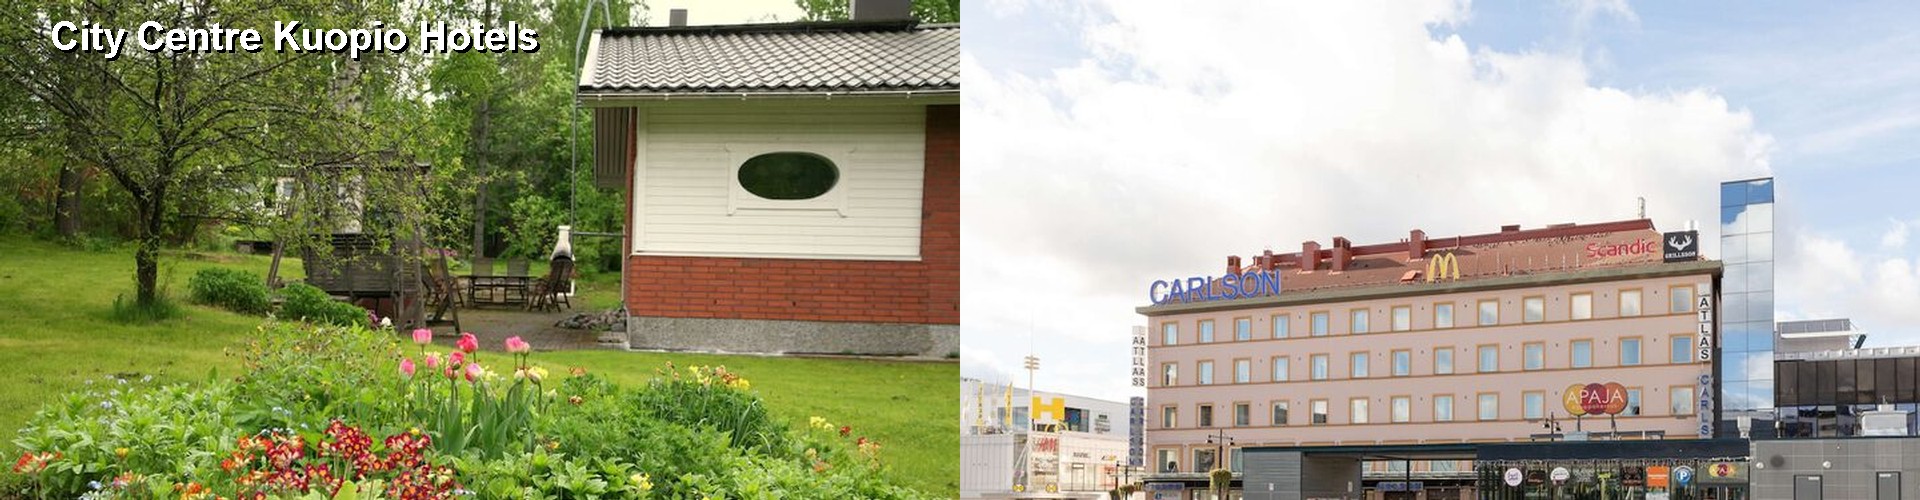 5 Best Hotels near City Centre Kuopio